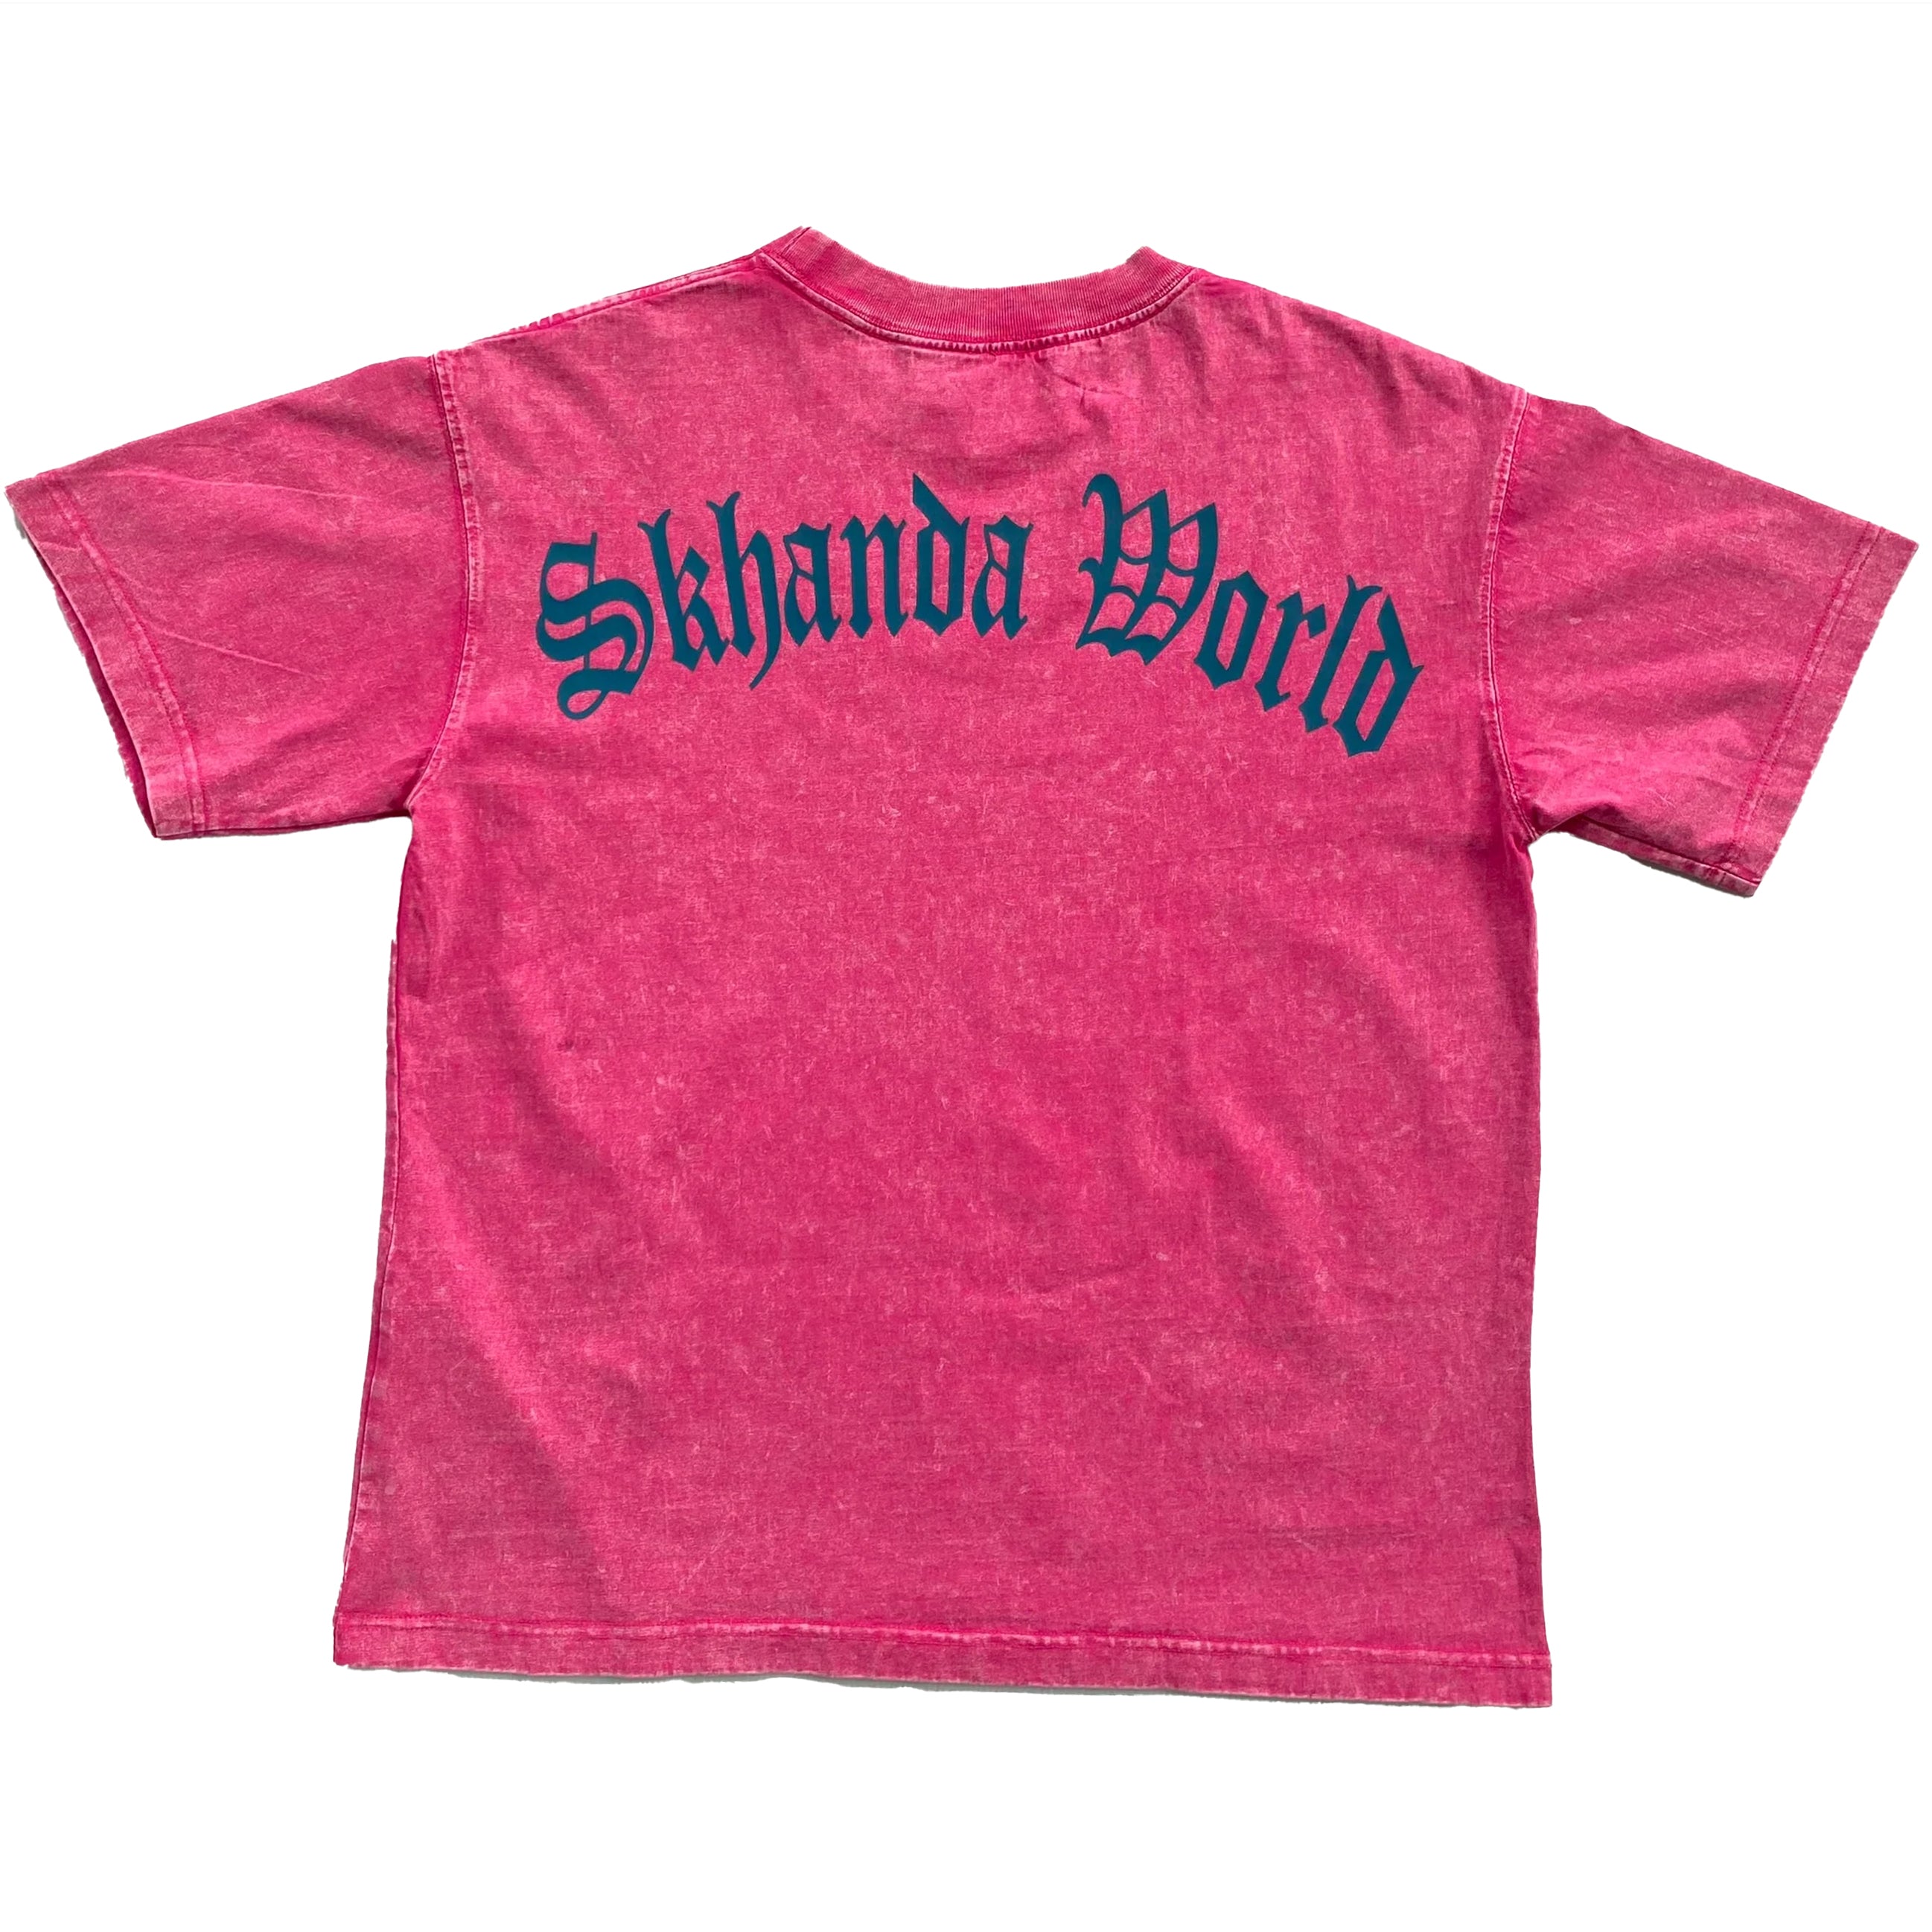 Skhanda World Ice-Cream Rockstar T-Shirt Stone Wash Pink